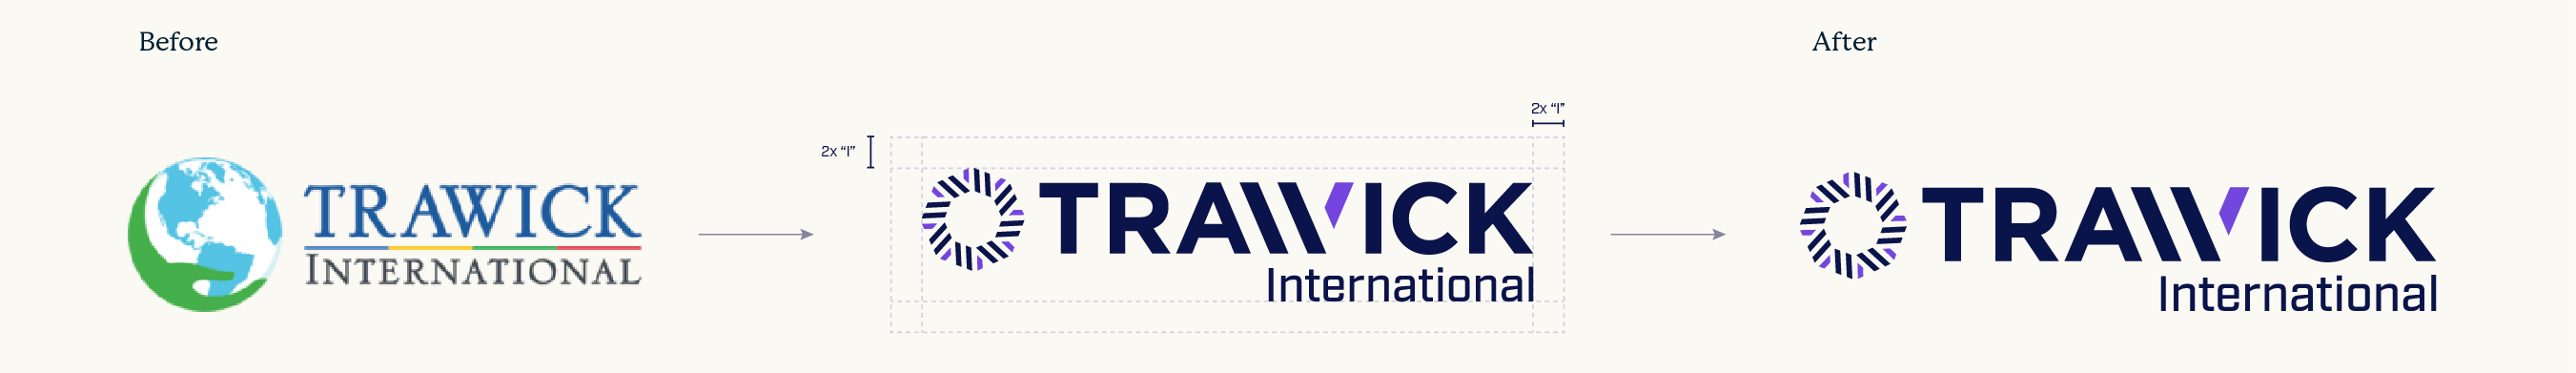 Trawick-Final-Logo